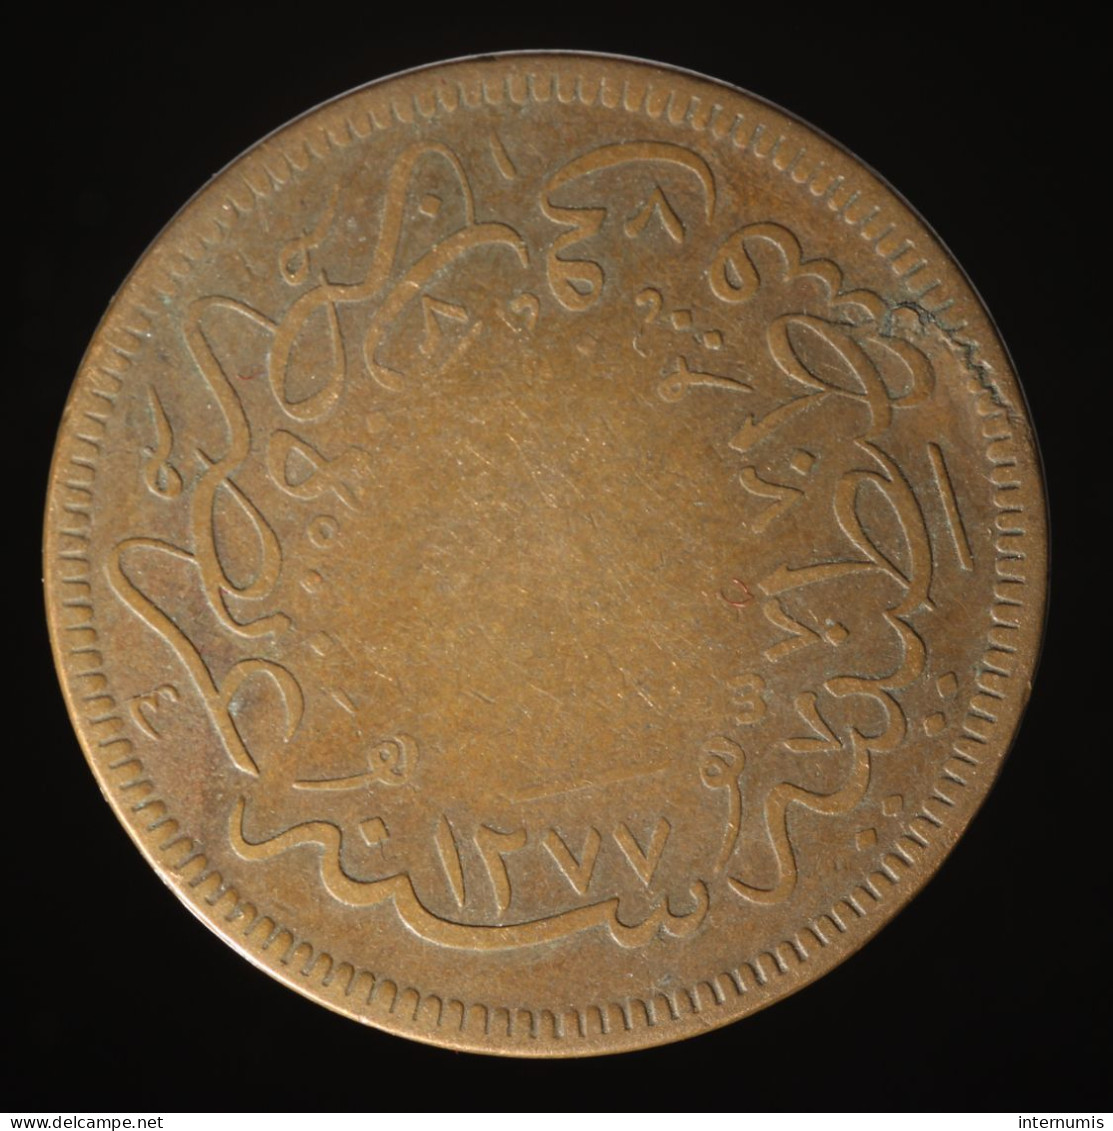  Turquie / Turkey, Abdulaziz, 40 Para, AH 1277//4 (1864), , Cuivre (Copper), TB+ (VF),
KM#702 - Egipto